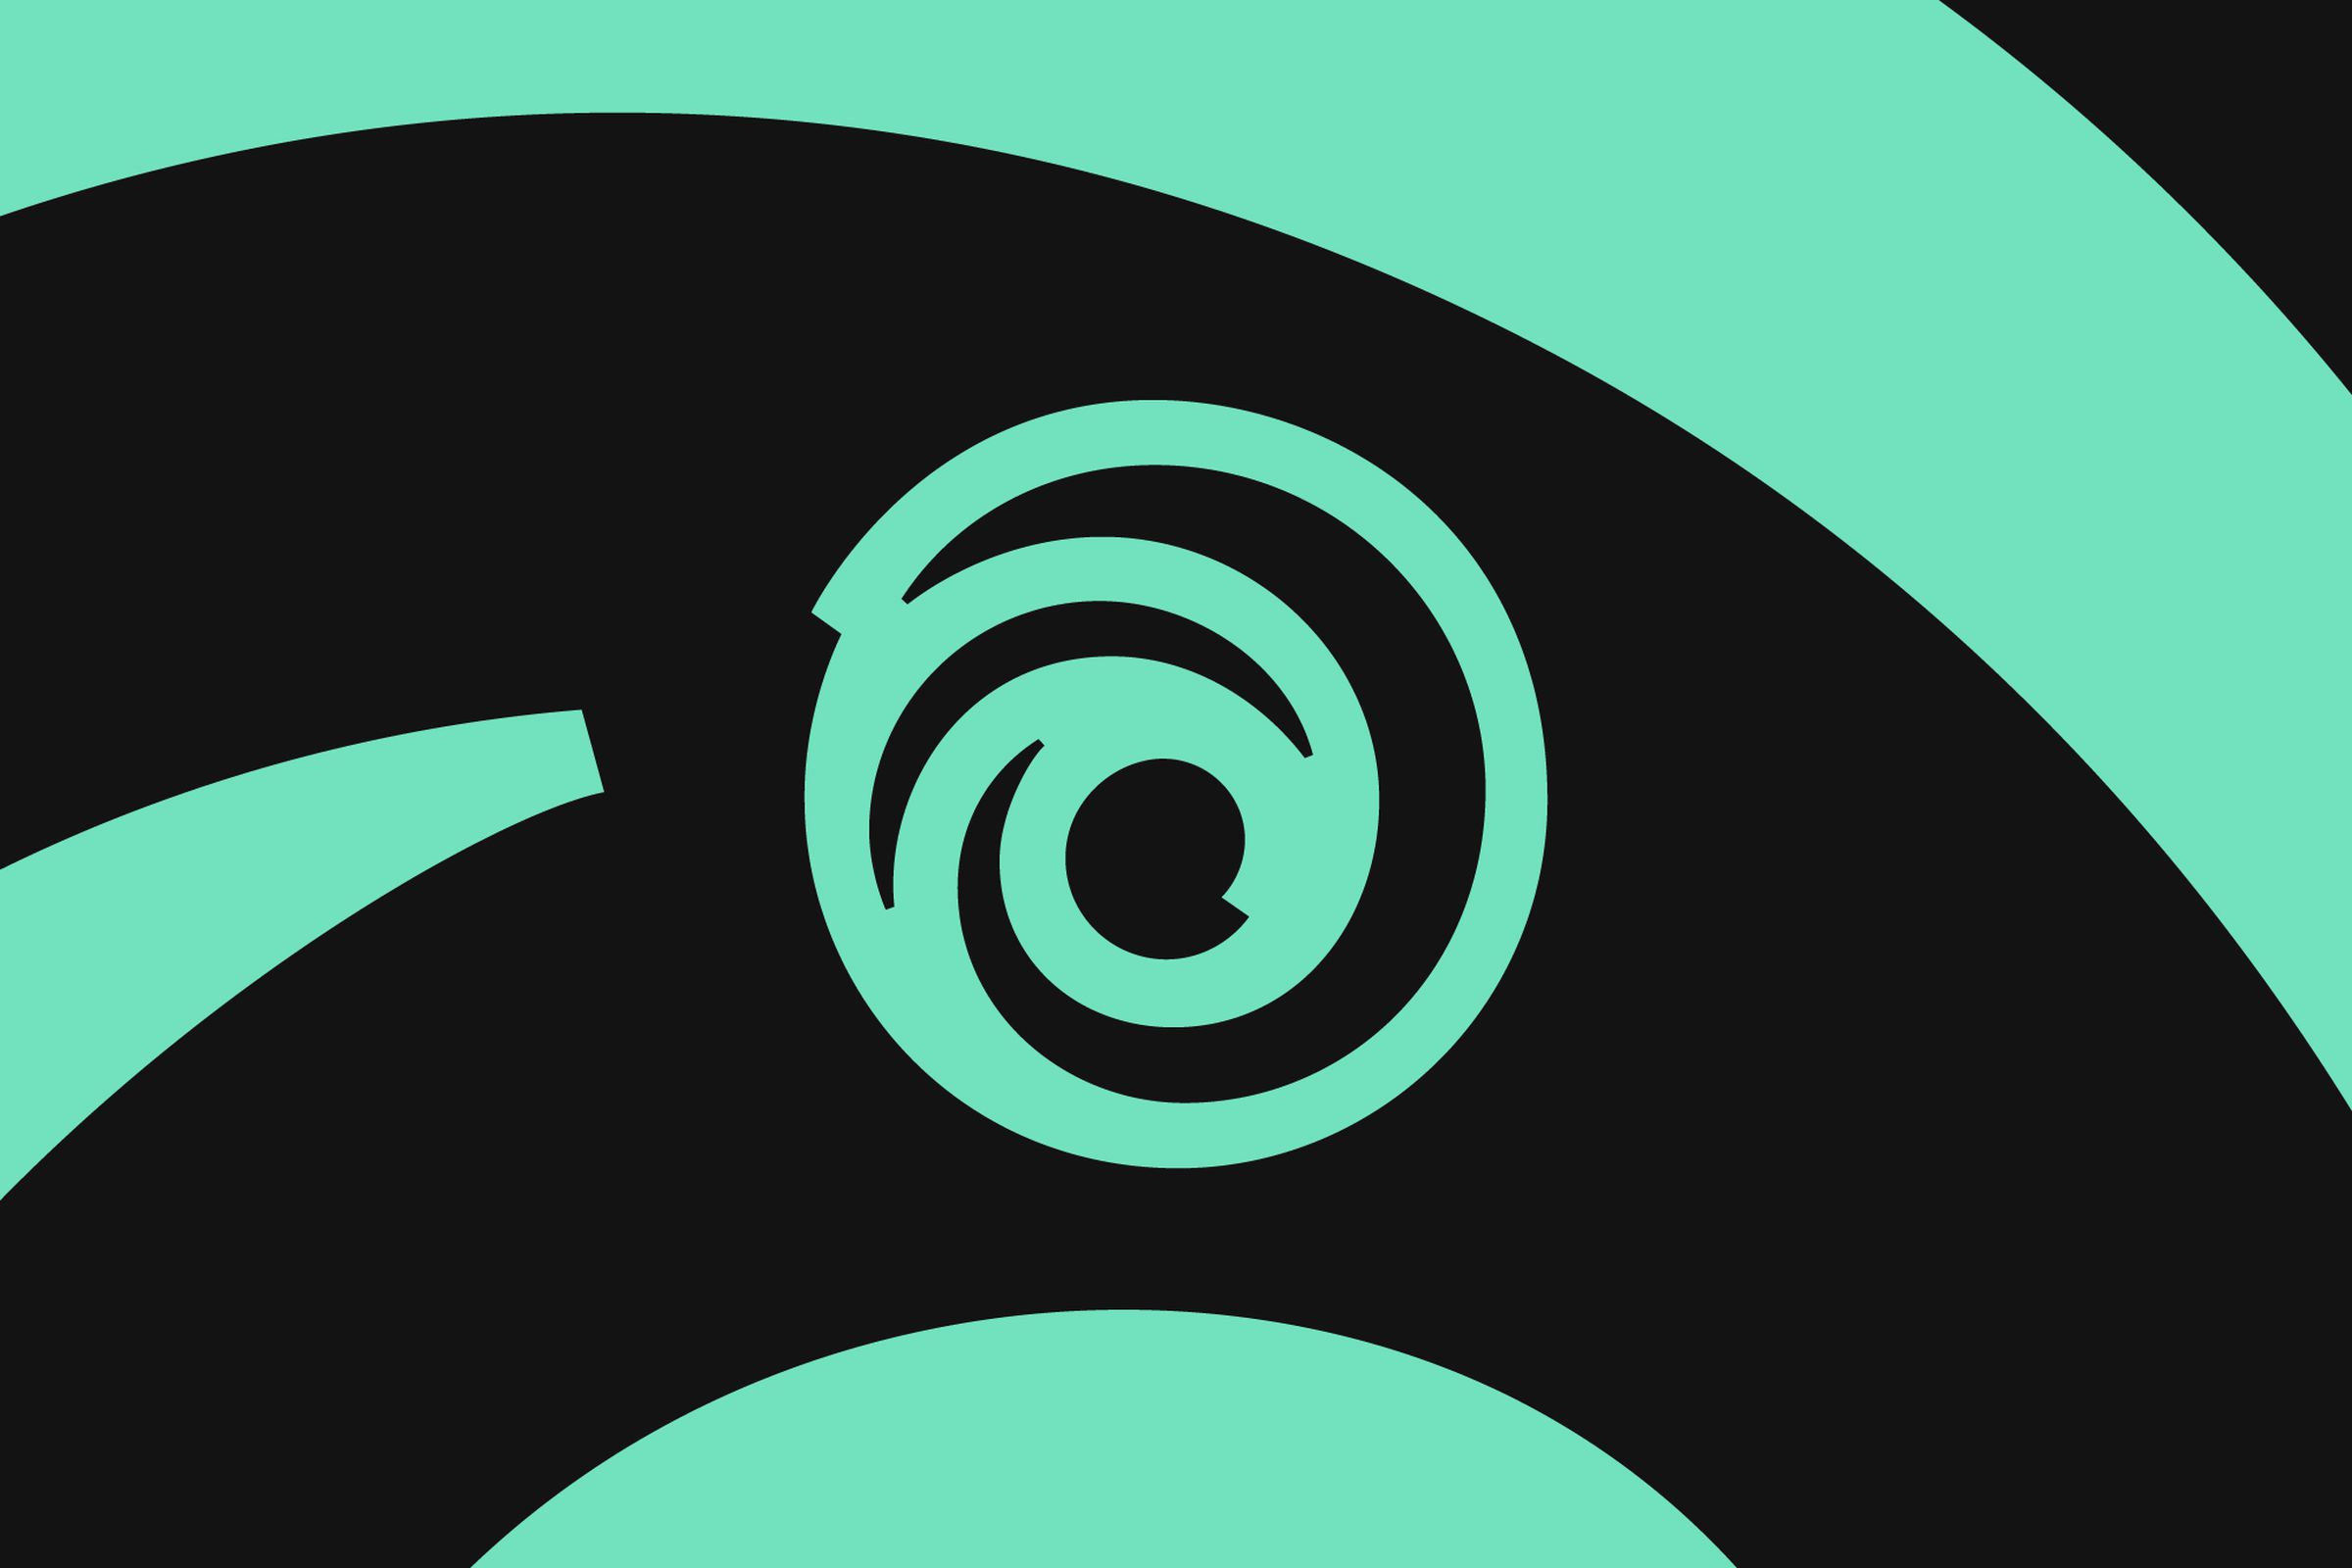 Black and green illustration of the Ubisoft logo